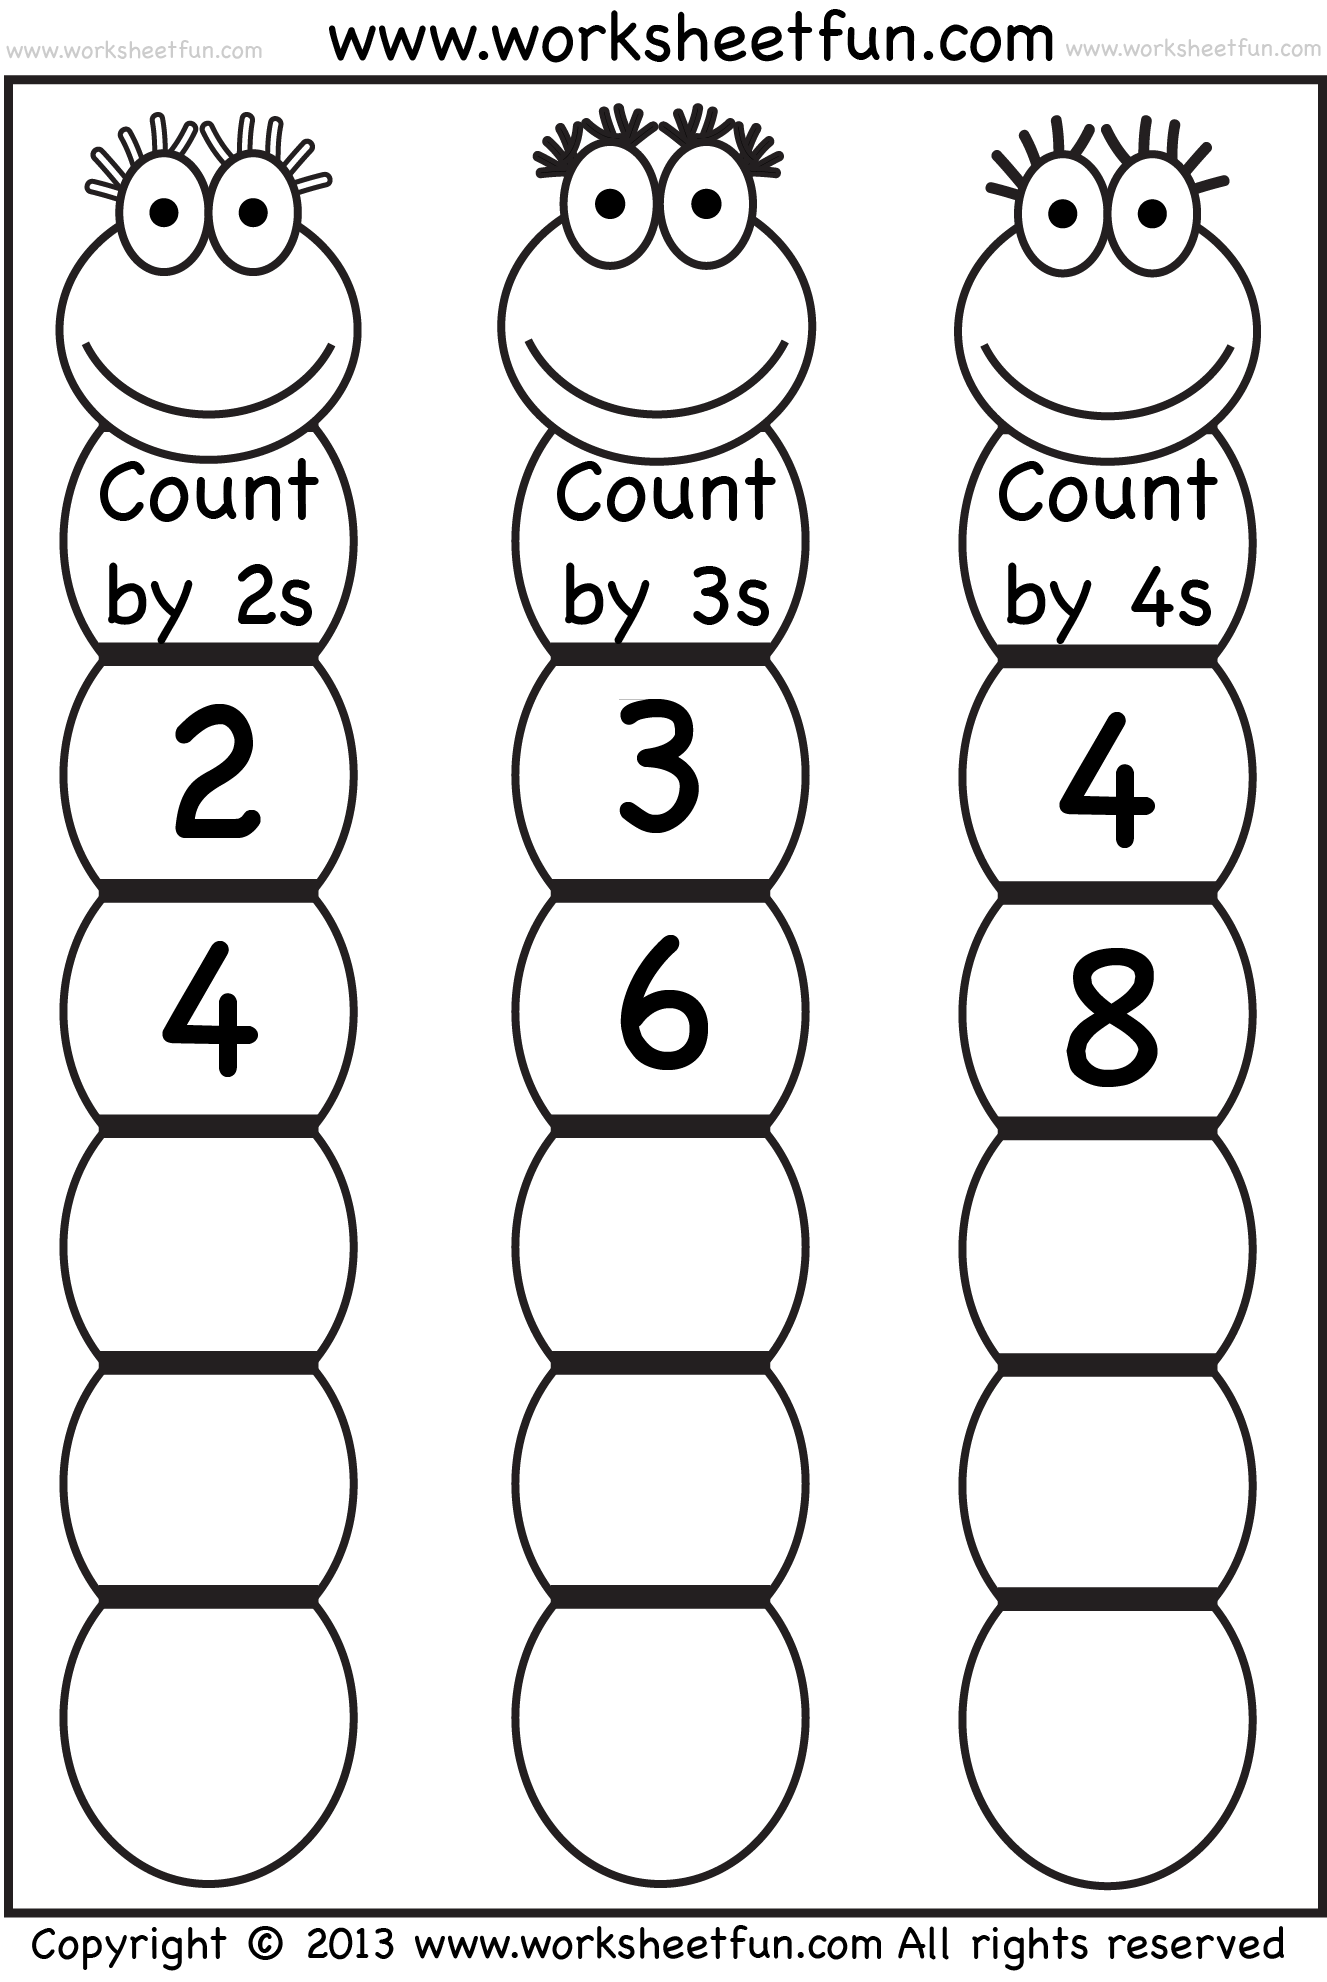 skip-counting-in-5s-worksheet